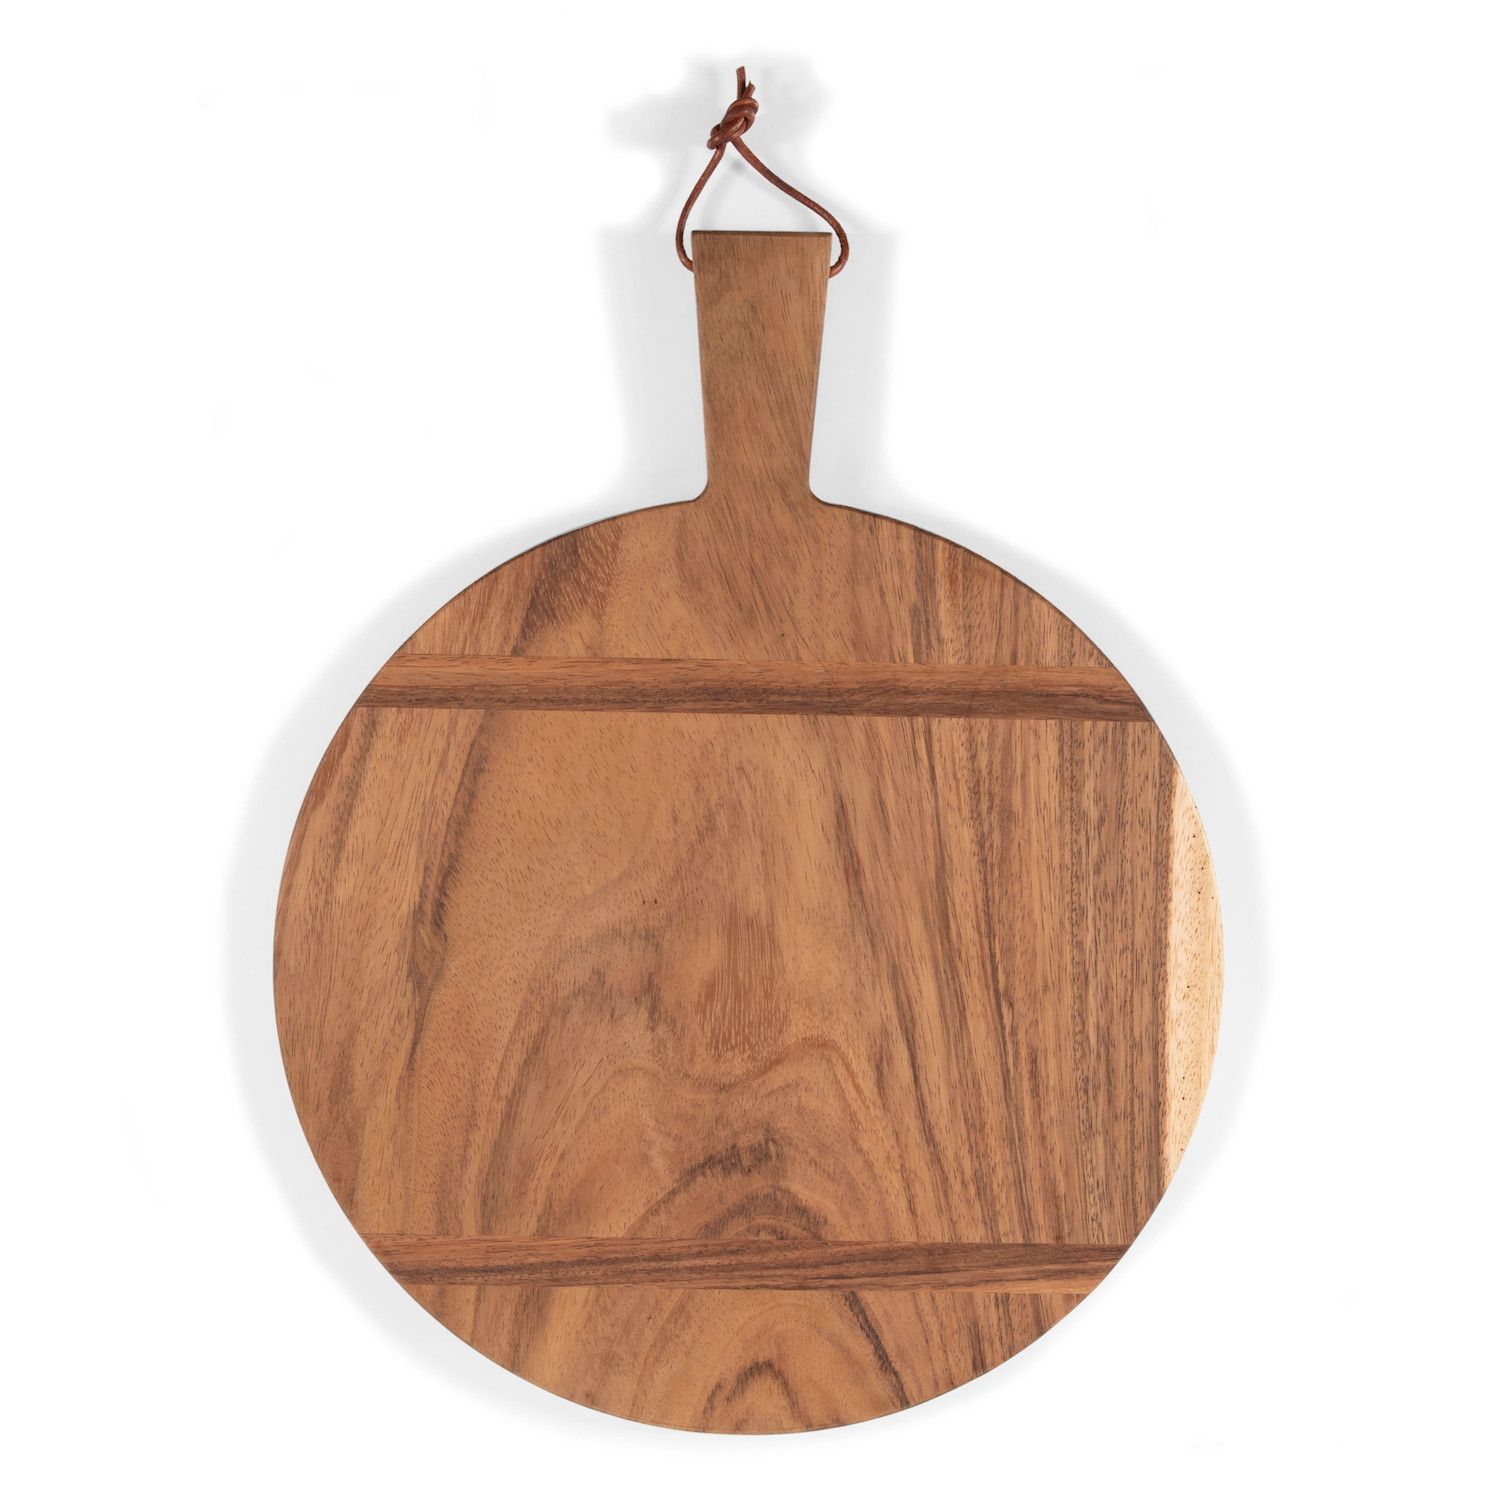 Kitchenaid Classic Rubberwood Cutting Board, 12-inch x 18-inch, Natural